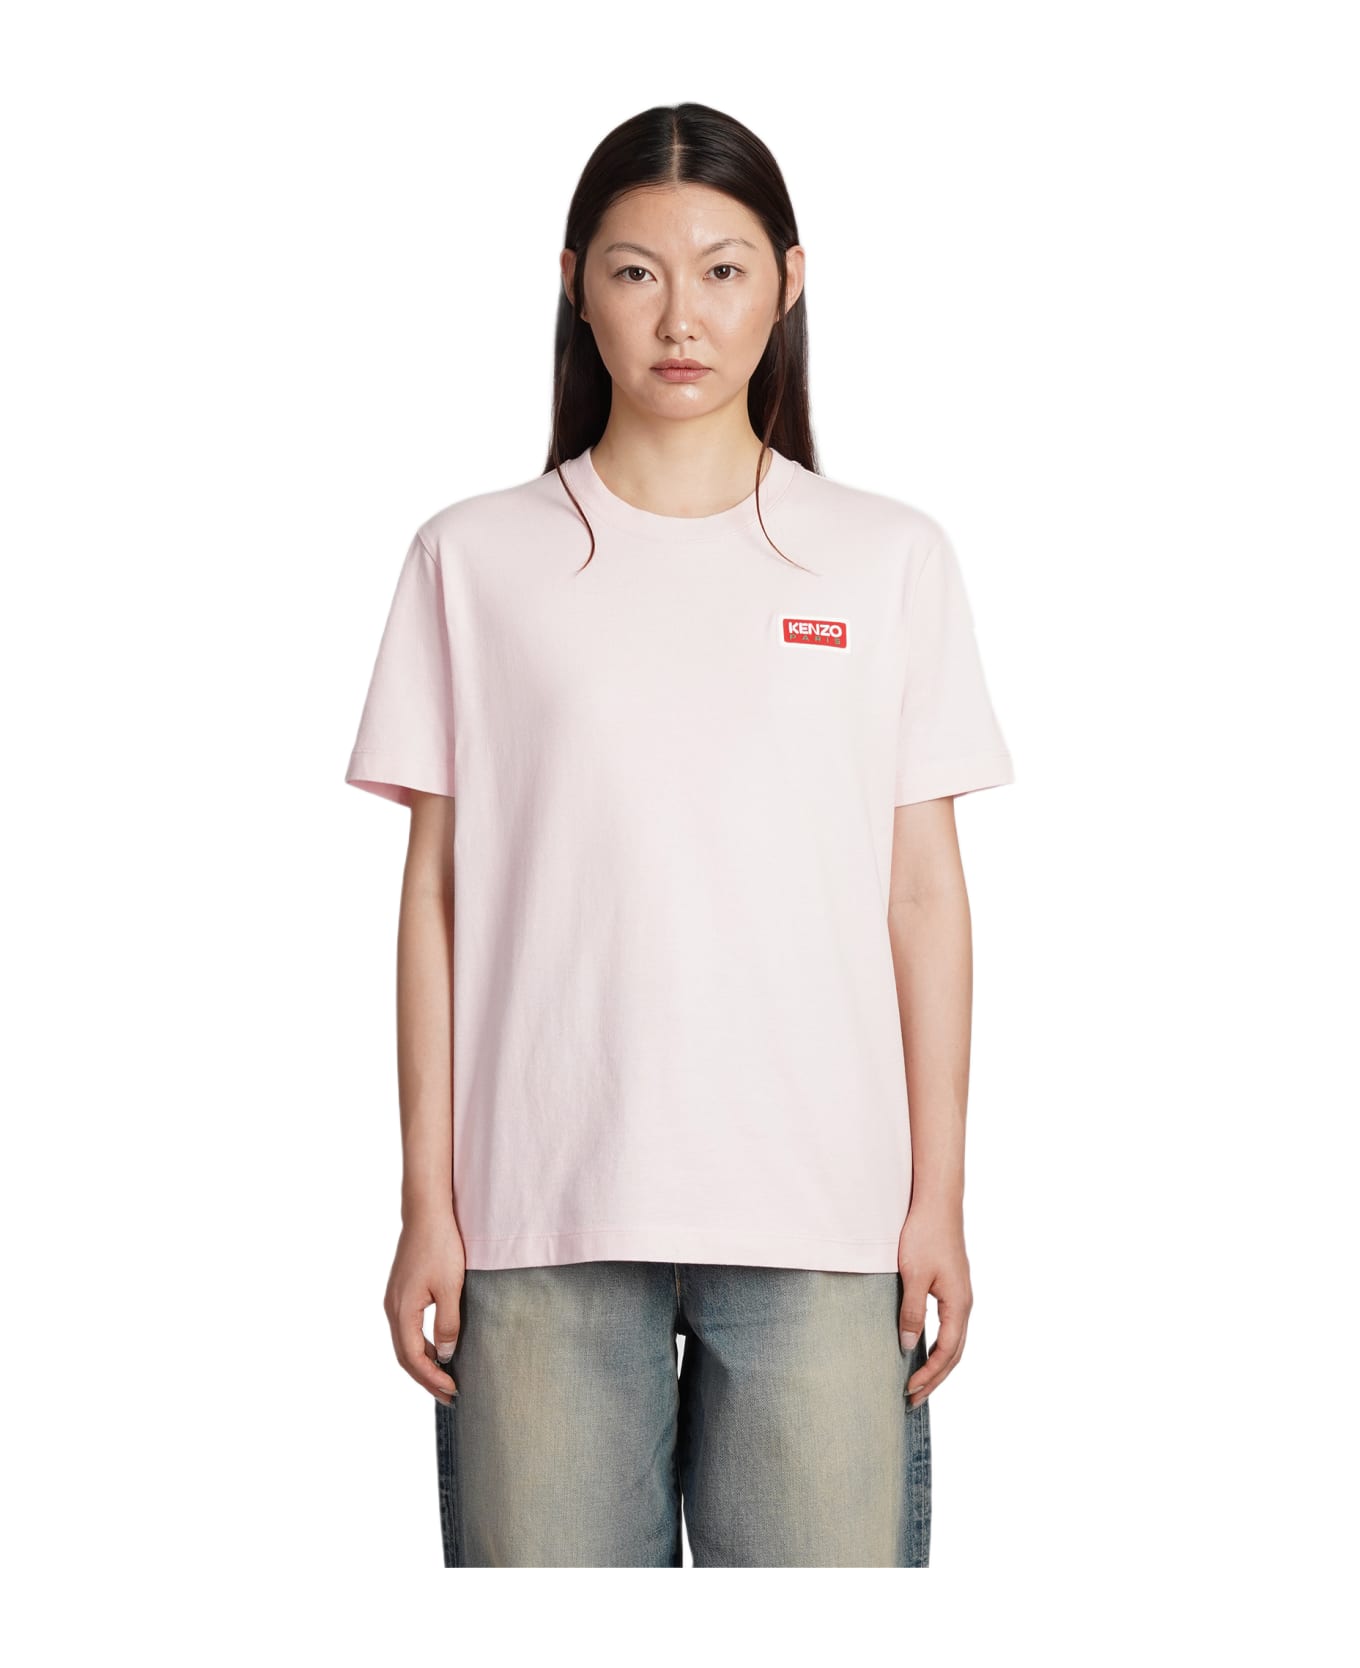 Kenzo Paris T-shirt - Pink Tシャツ